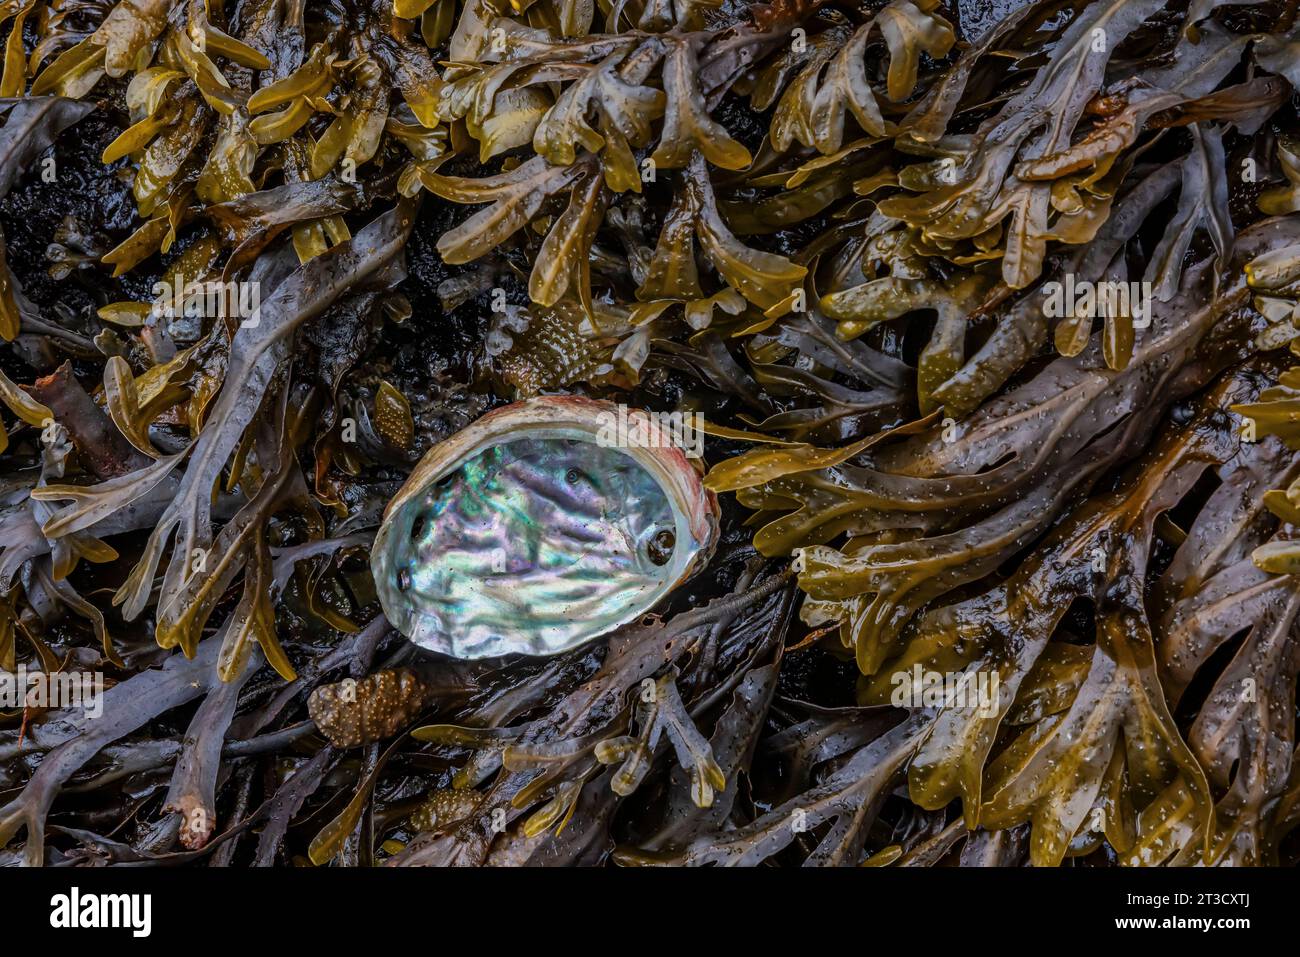 Abalone and seaweed at the ancient Haida village of T'aanuu Linagaay, Gwaii Haanas National Park Reserve, Haida Gwaii, British Columbia, Canada Stock Photo